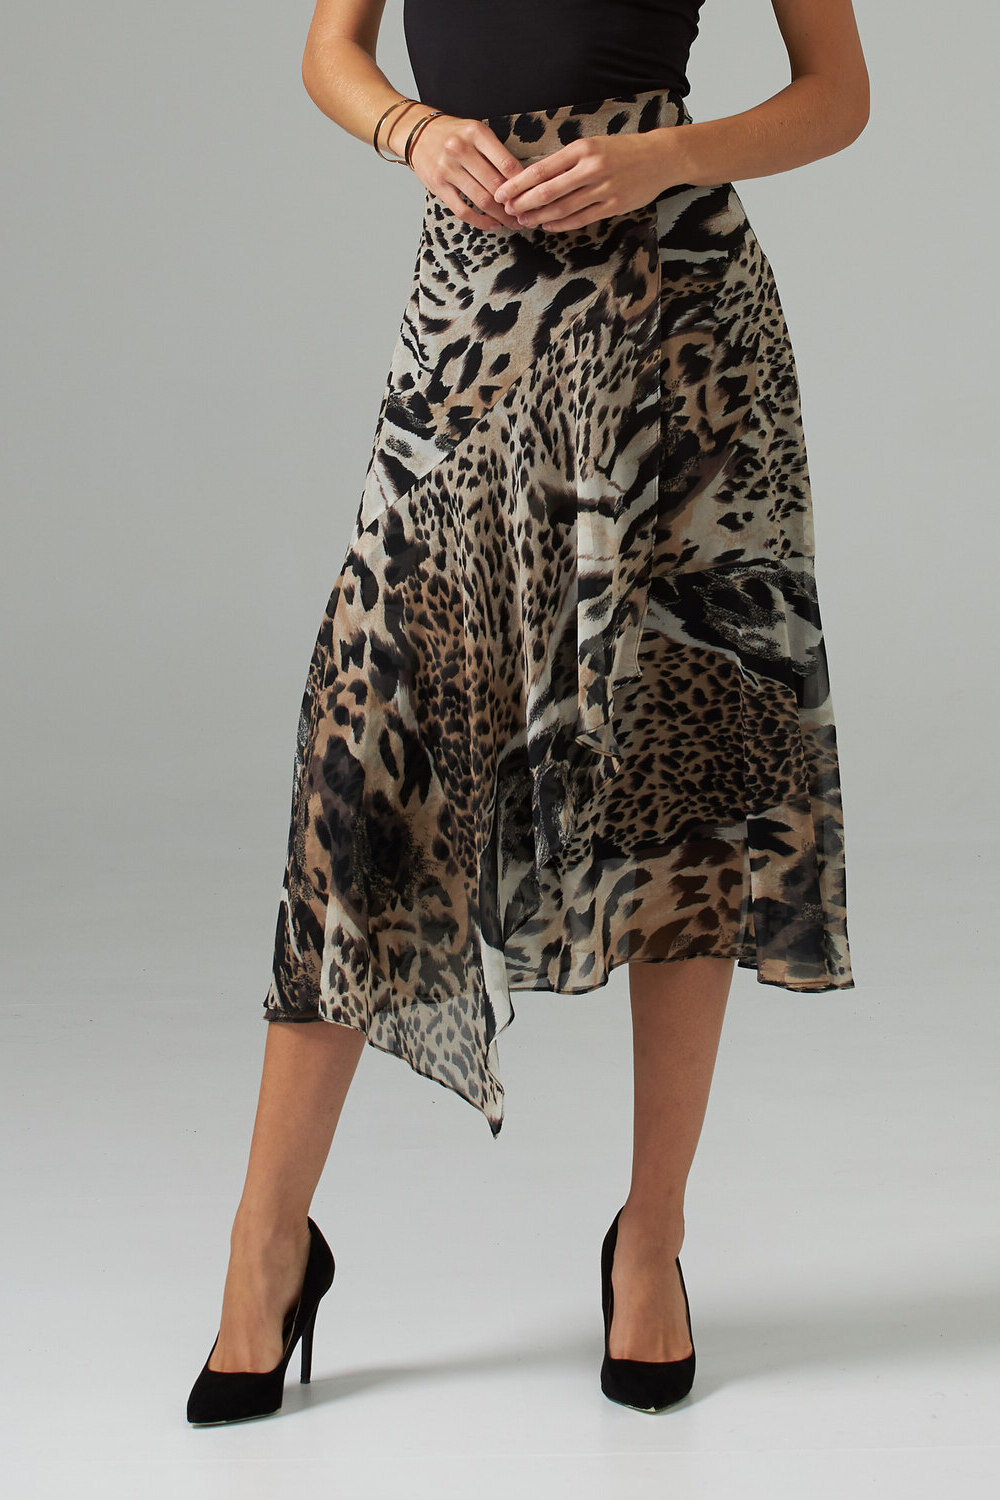 Joseph Ribkoff Skirt Style 203558. Black/multi